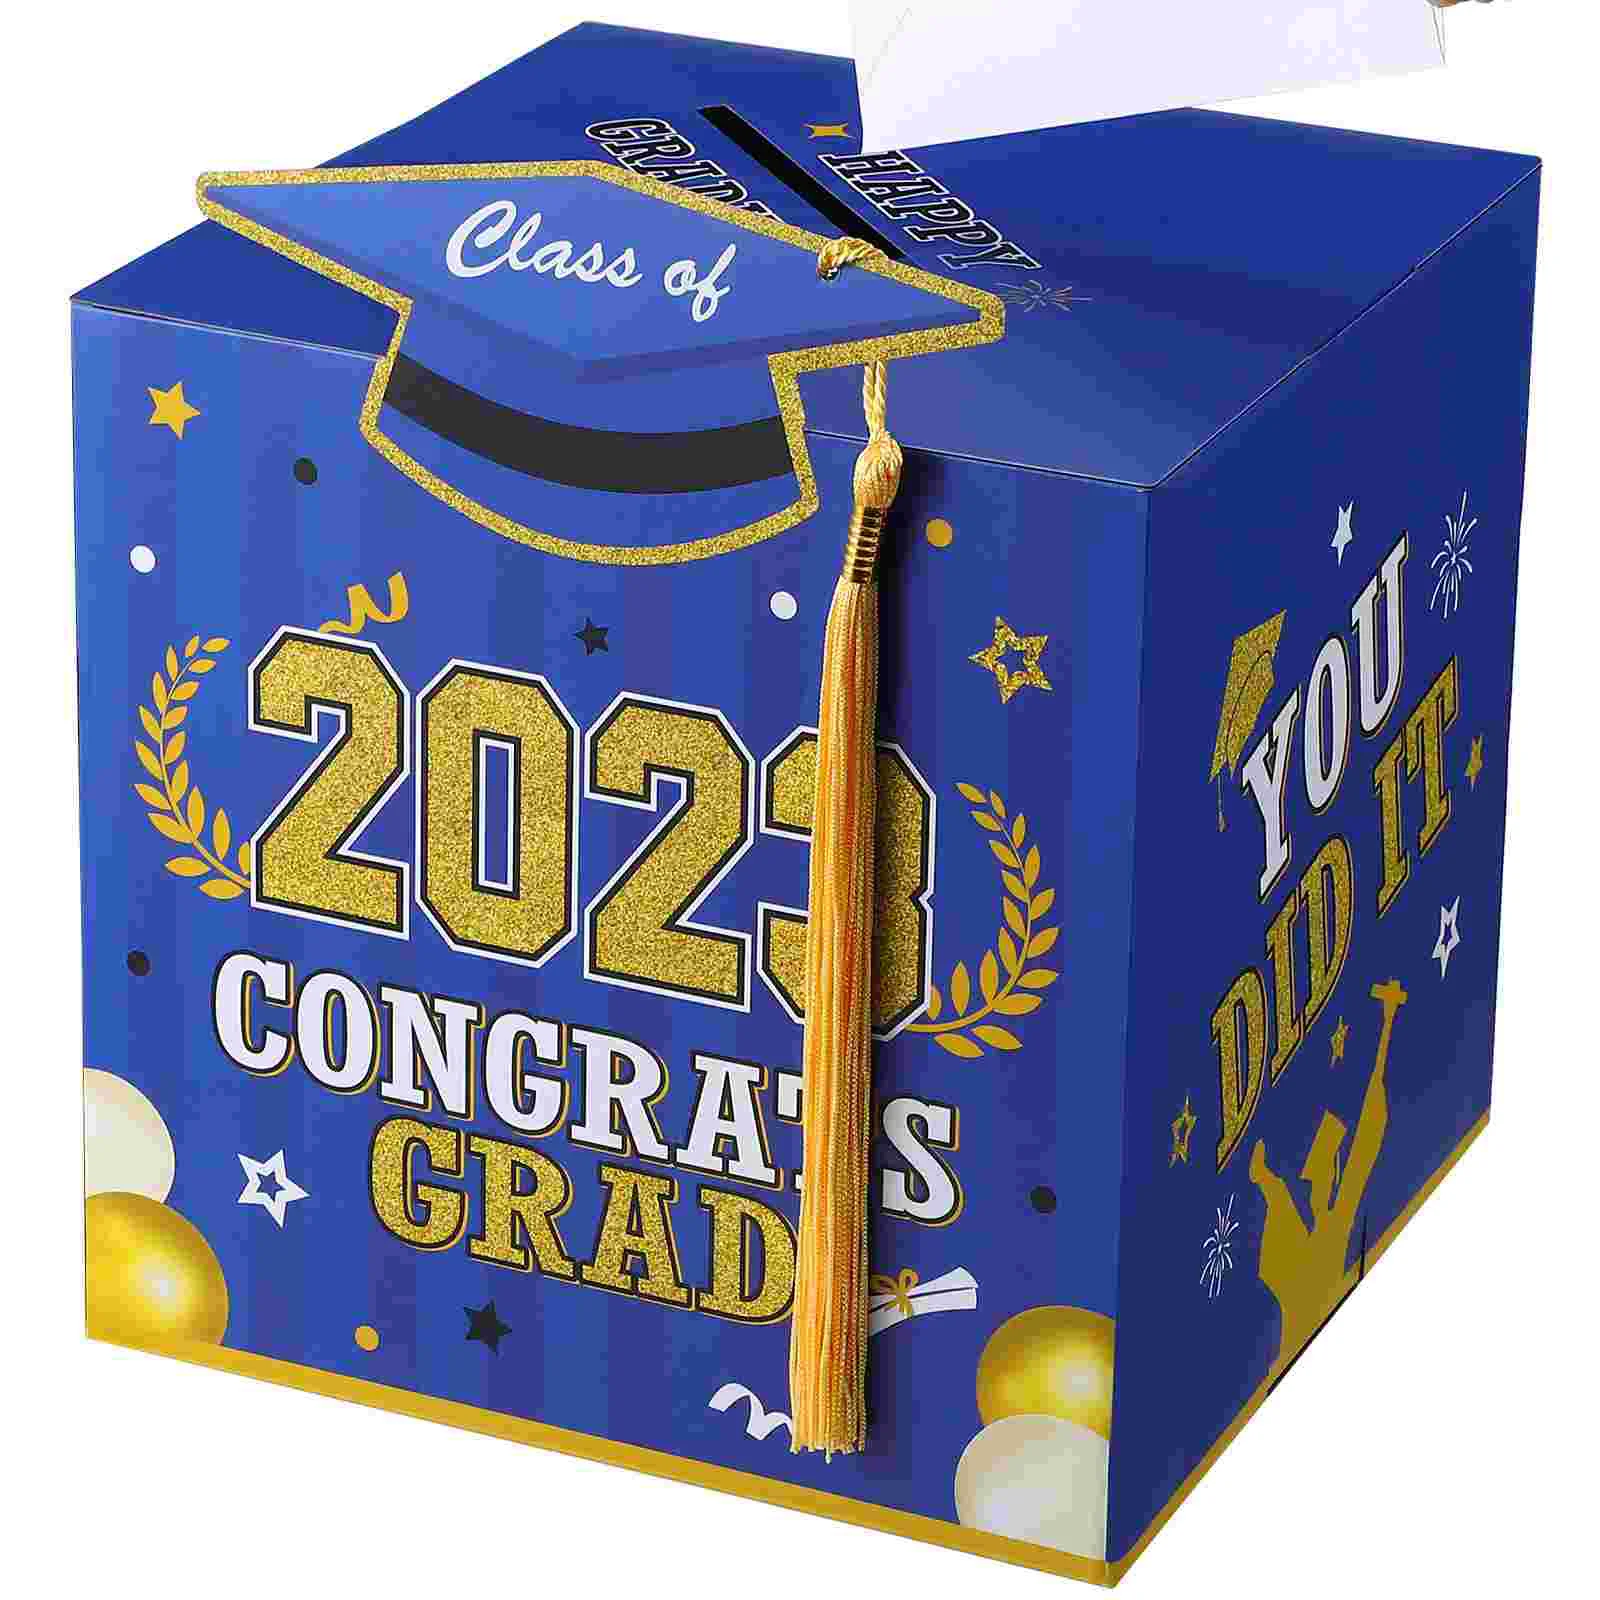 

Box Graduation Grad Party Holder Gift Congrats Decorations Supplies Graduate Boxes Favors Invitation Advice Cap 2023 Blue